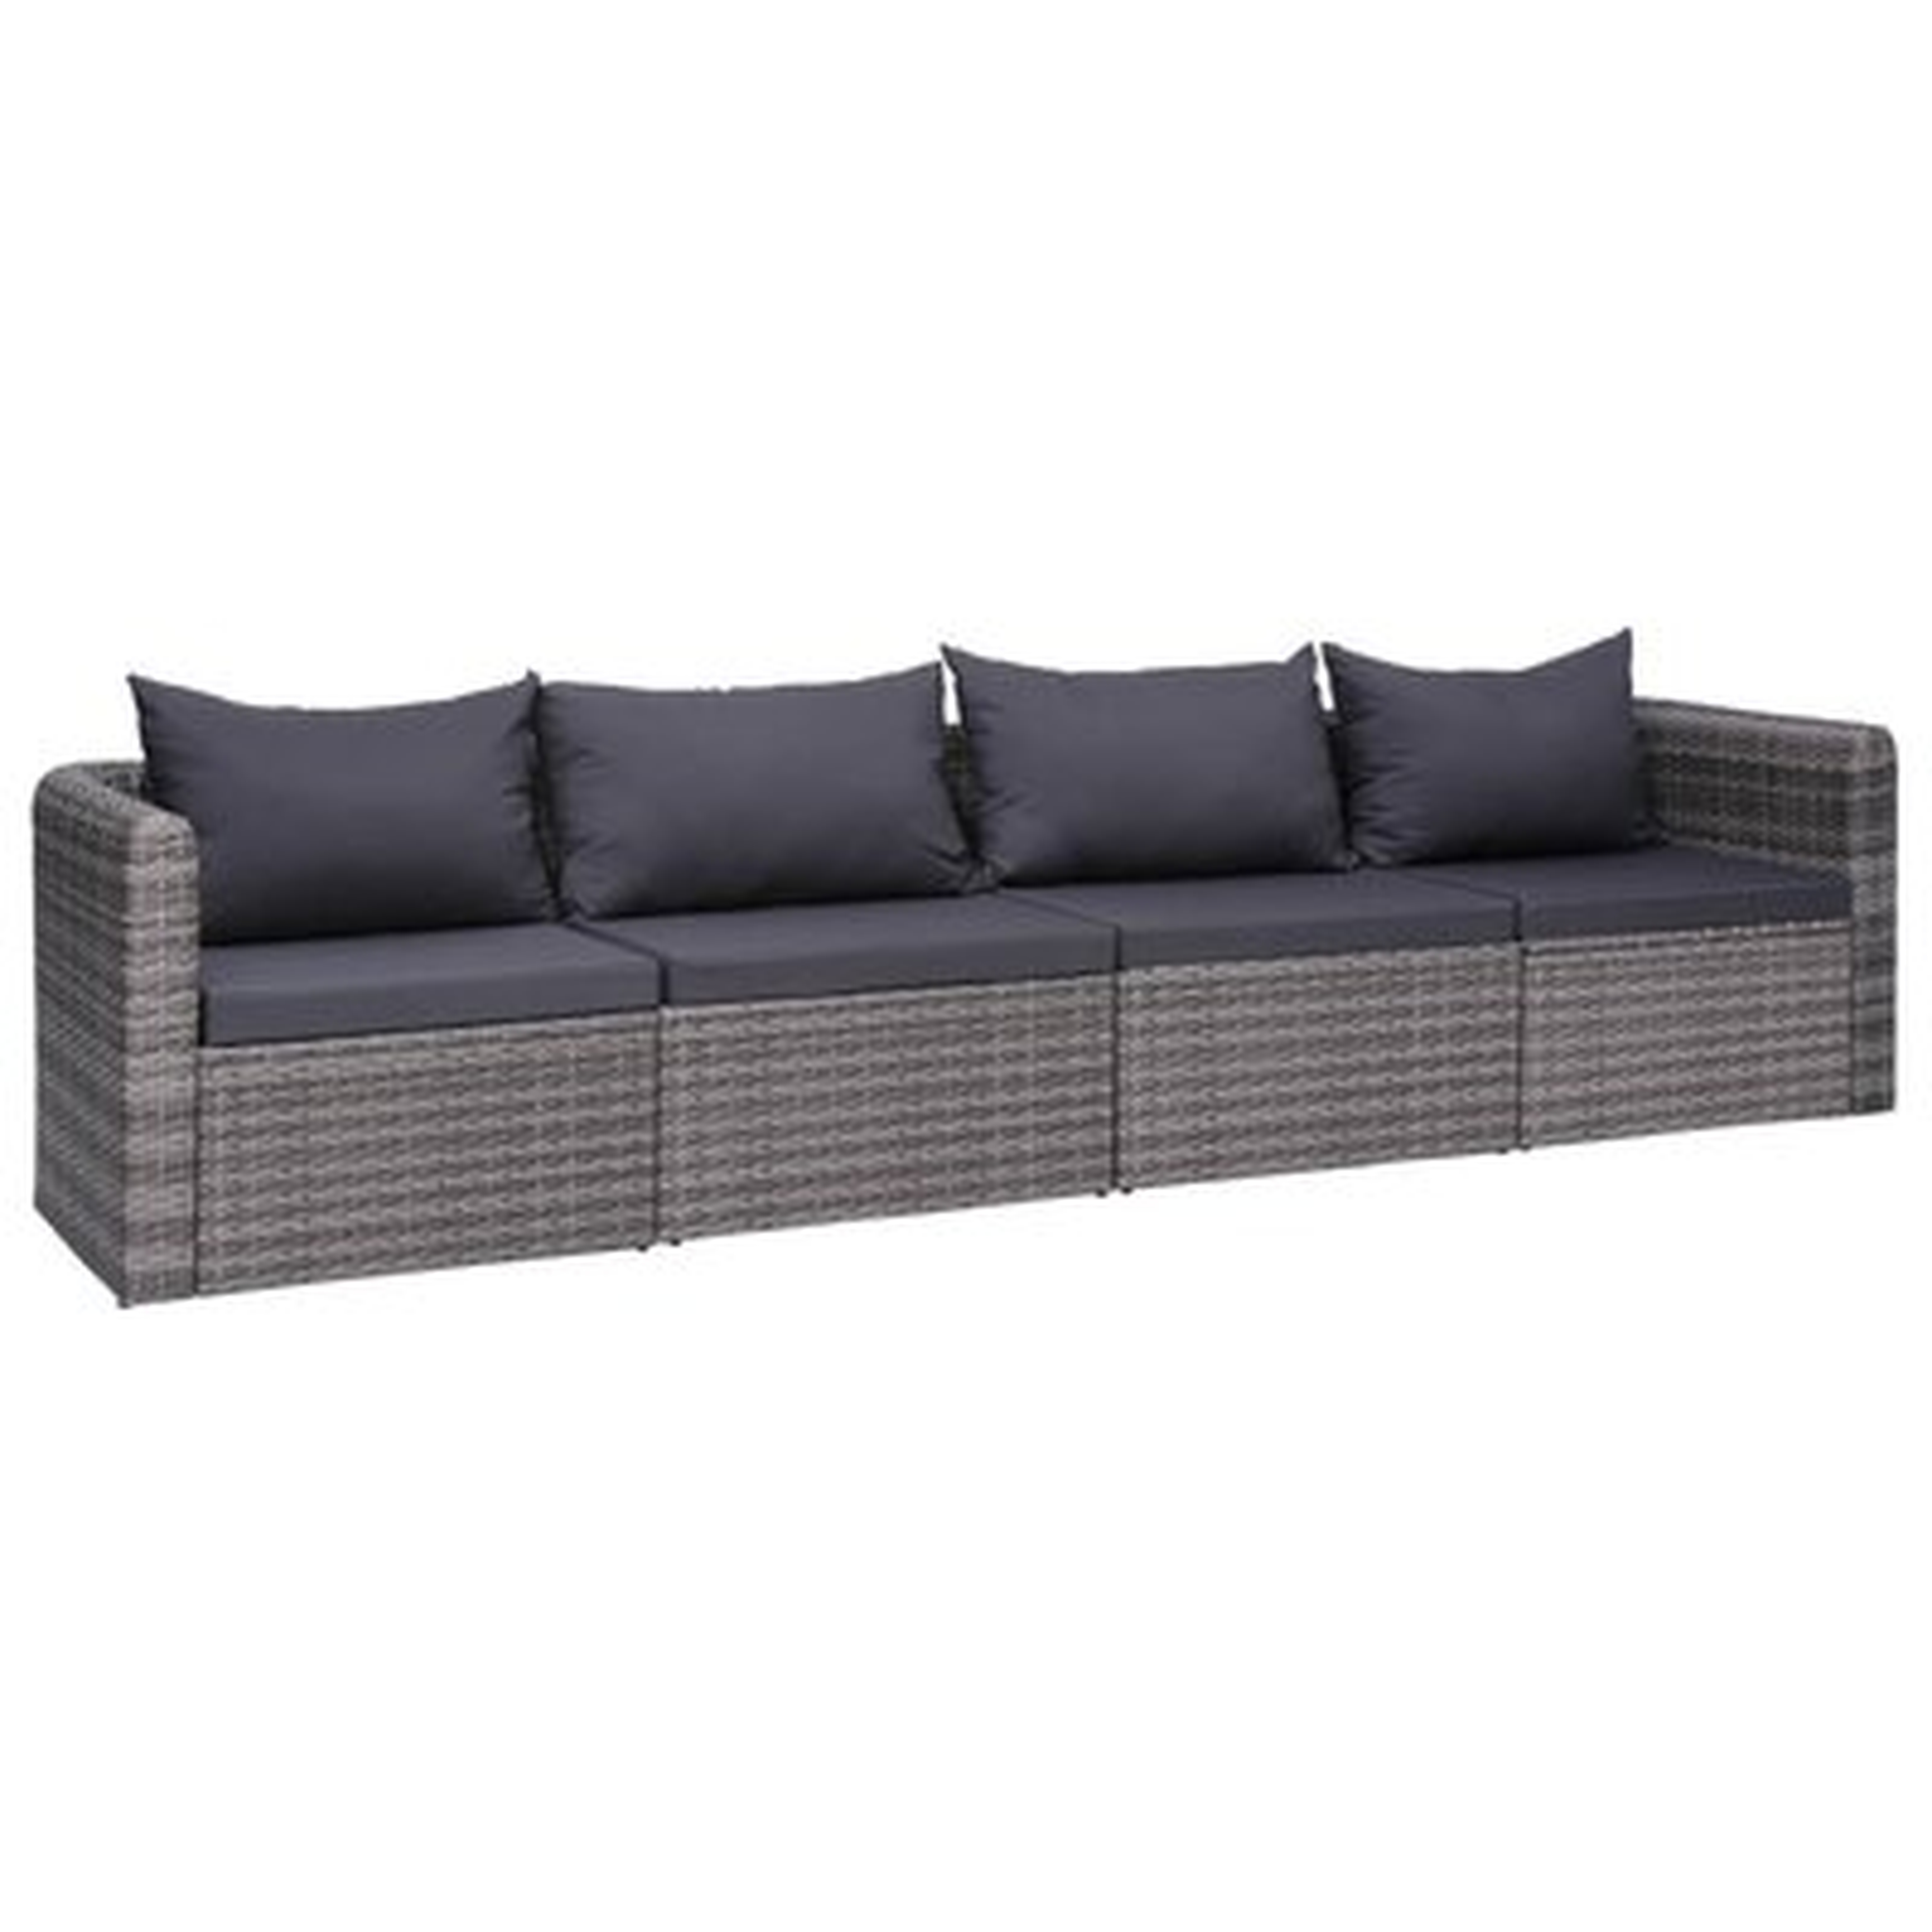 Farbourgh Patio Sofa with Cushions - Wayfair